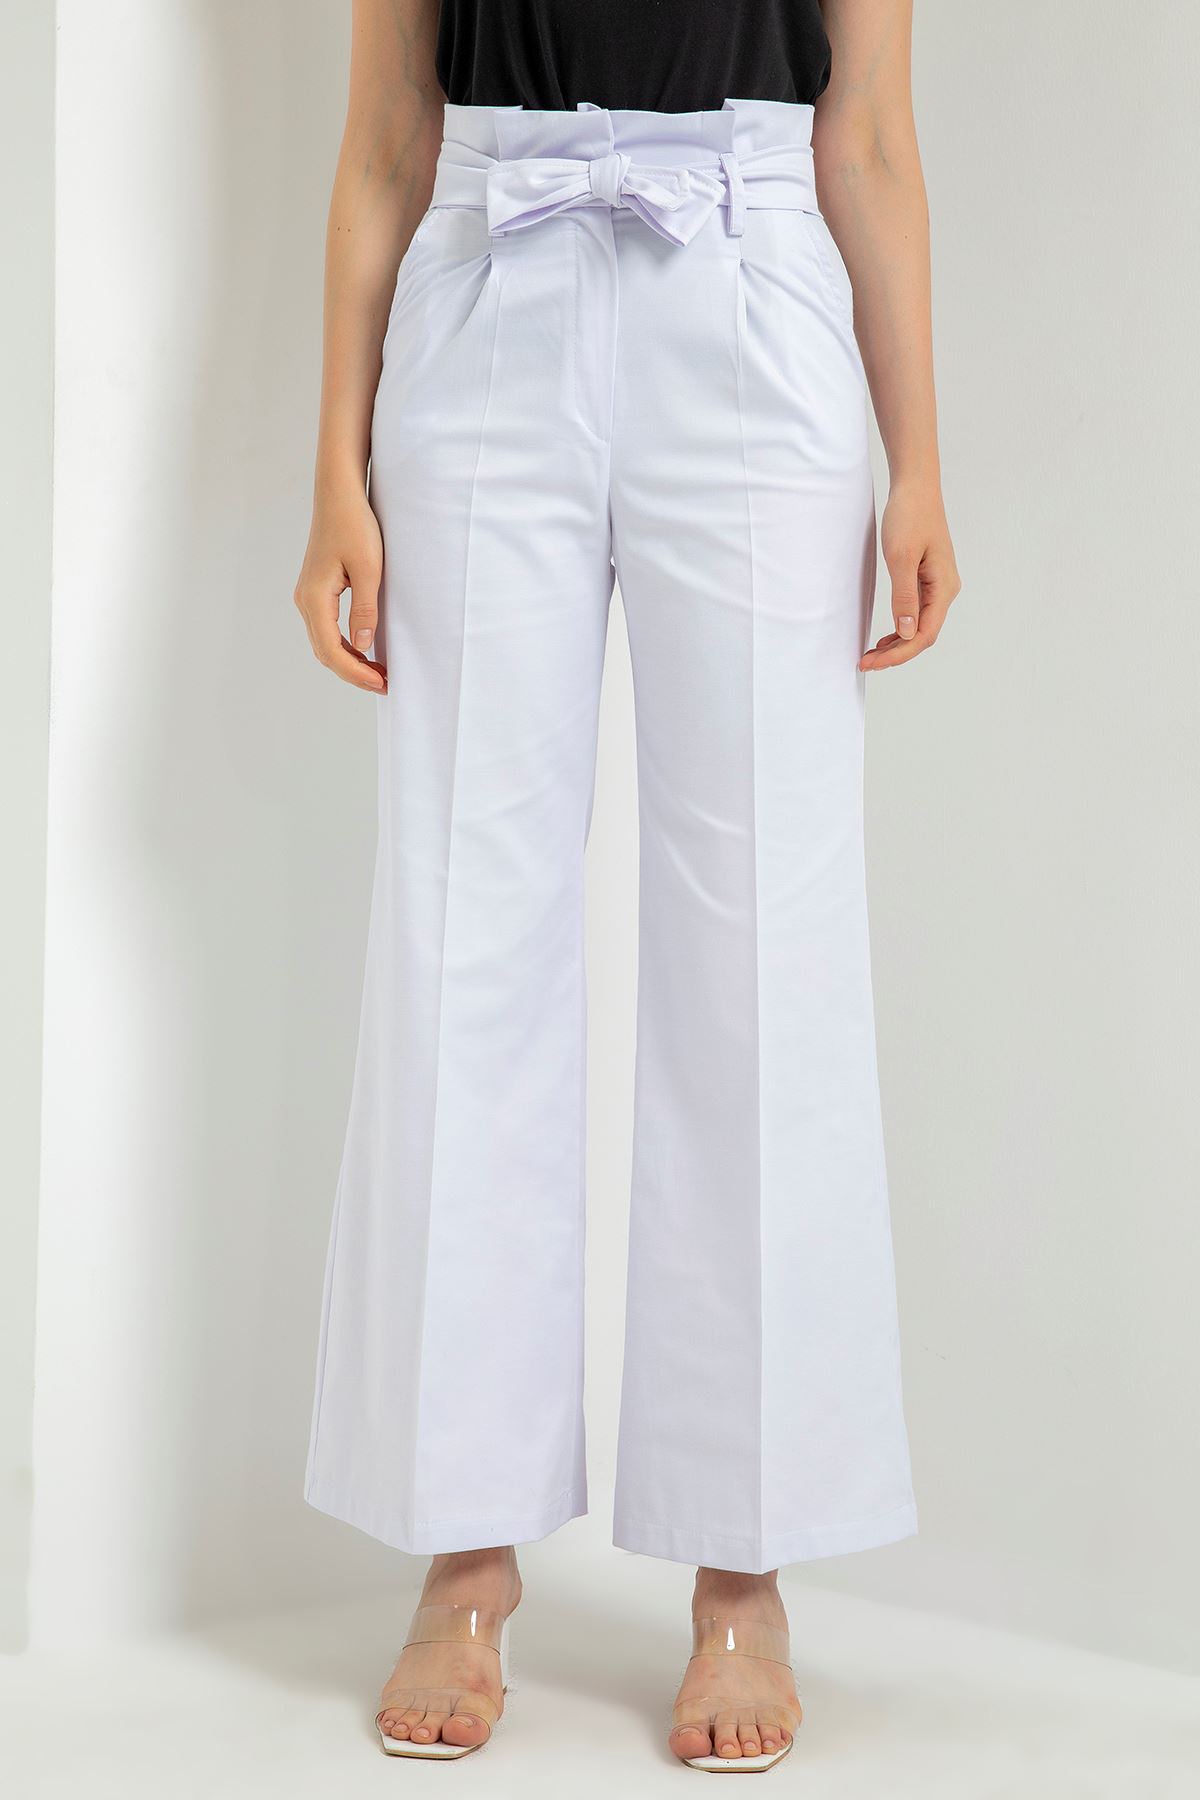 Aerobin Fabric Short Sleeve Ruffled Collar Comfy Fit Women Dress - White